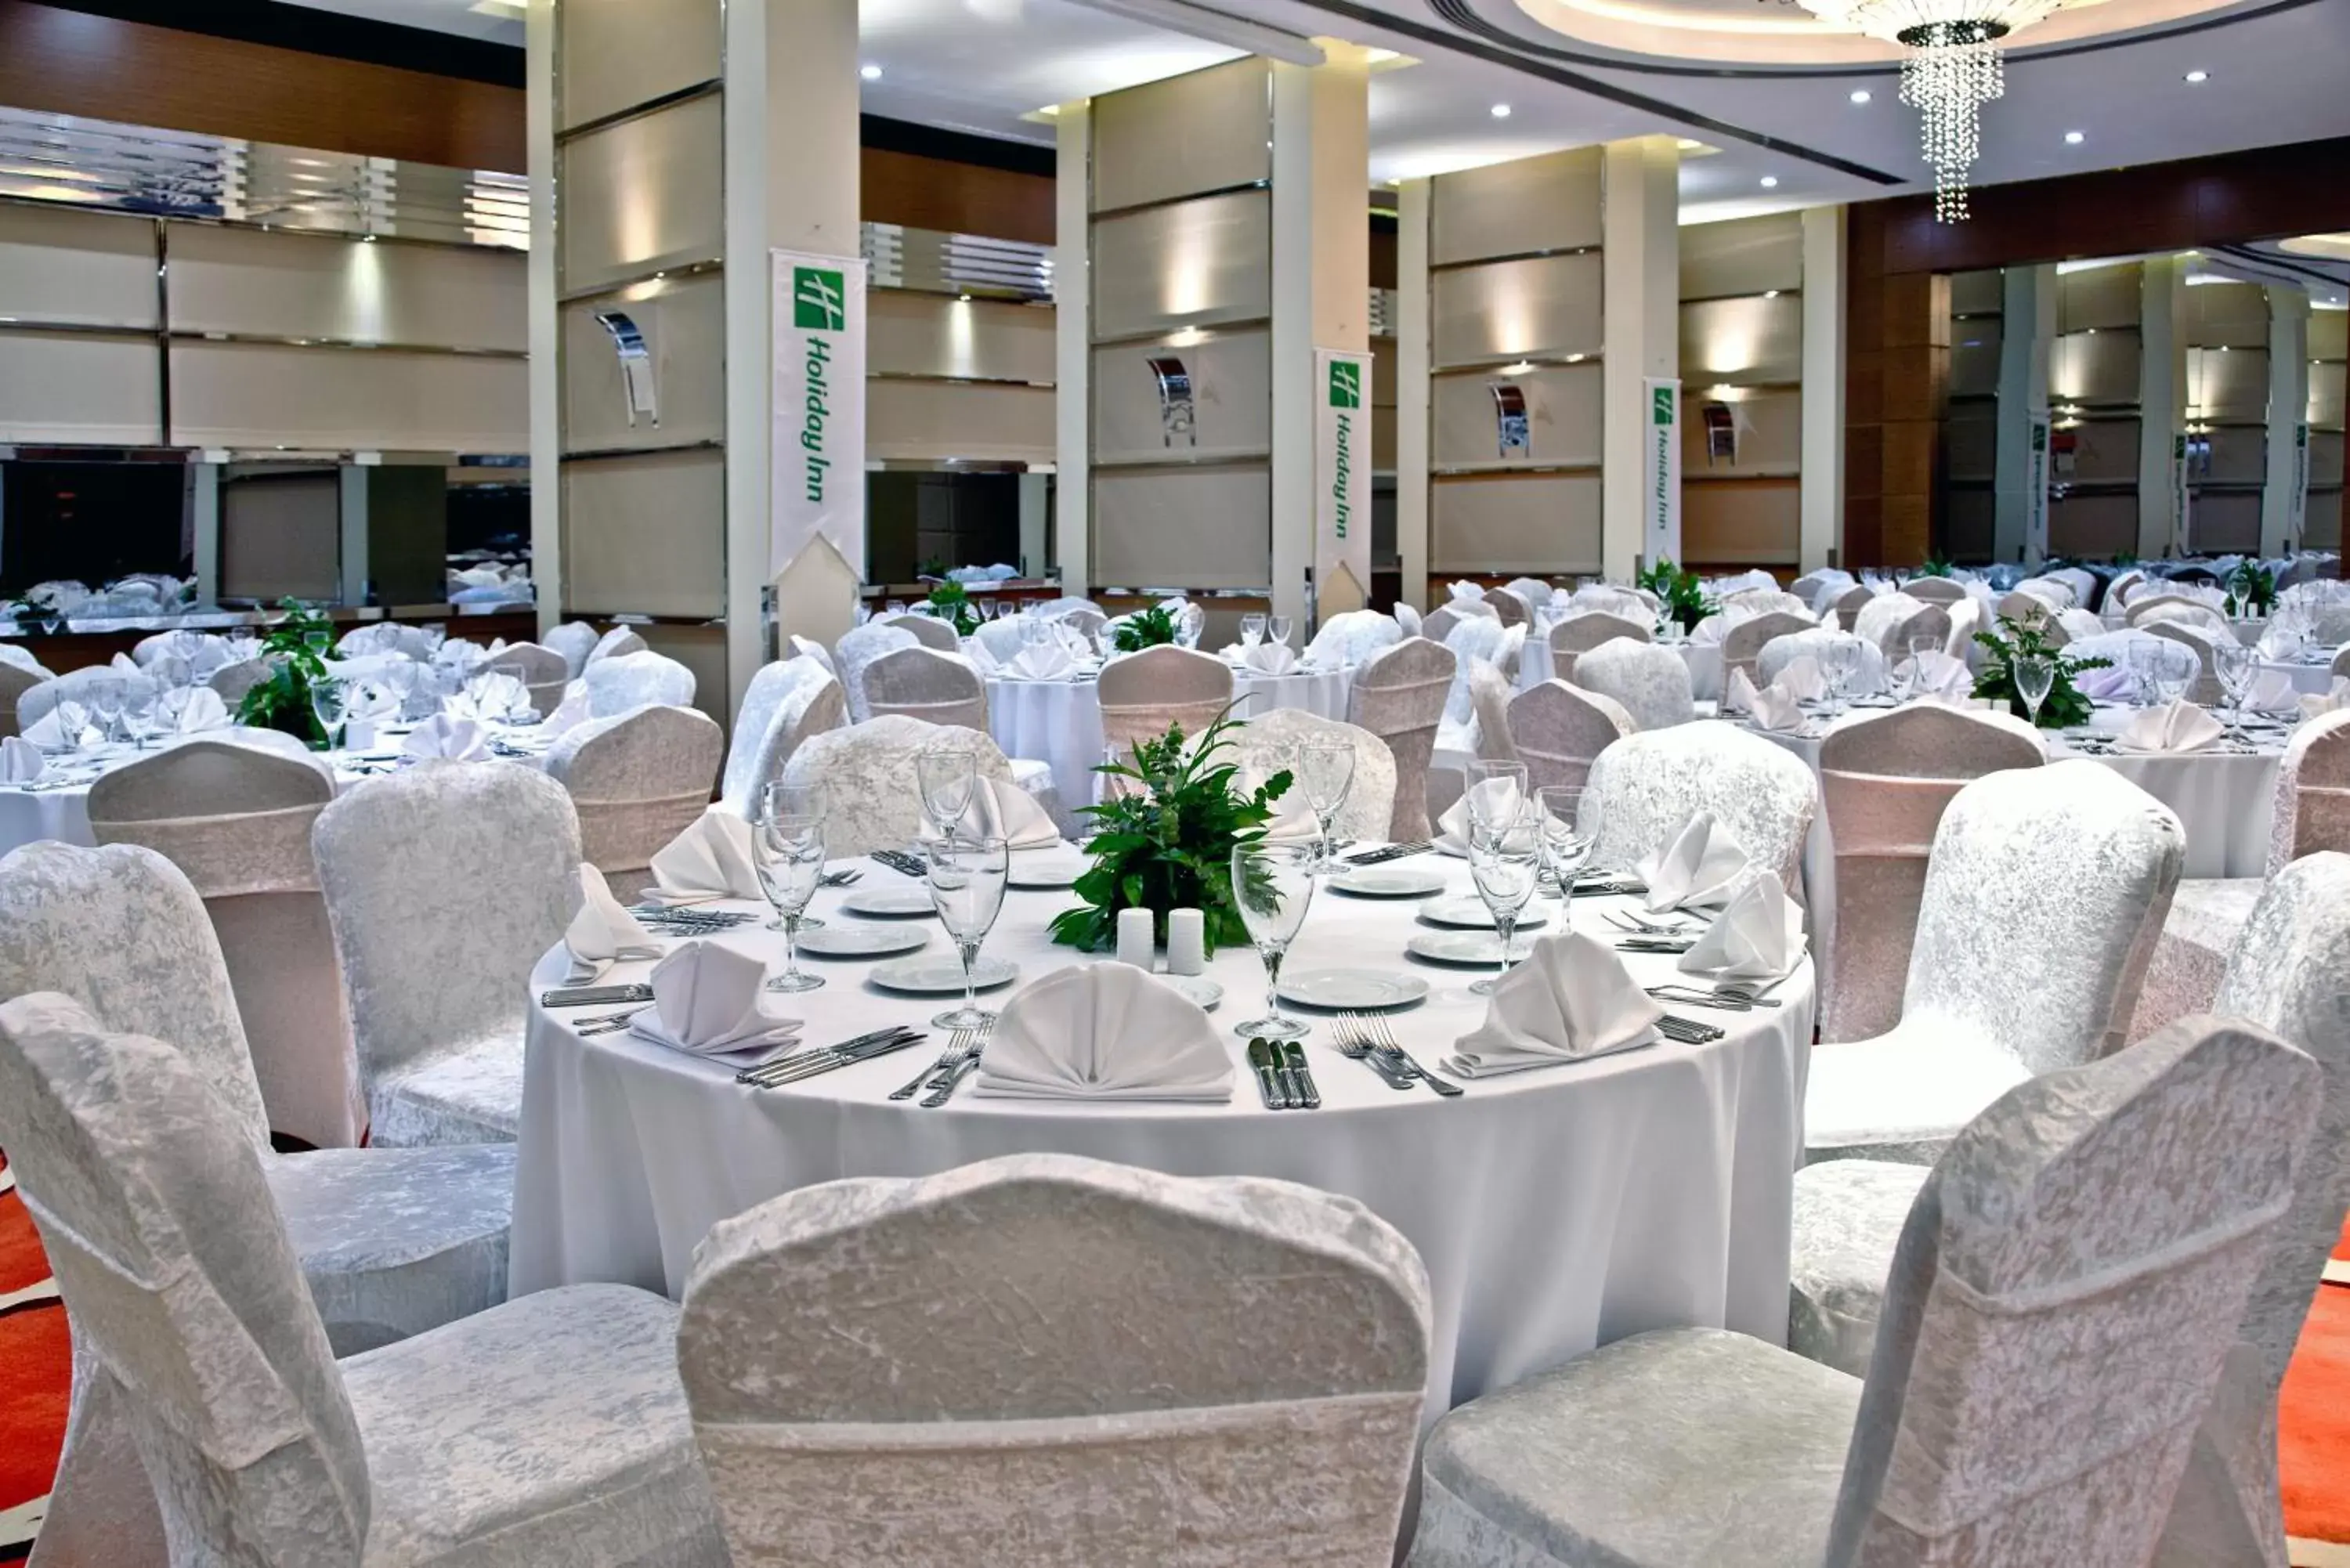 Banquet/Function facilities, Banquet Facilities in Holiday Inn Ankara-Kavaklidere, an IHG Hotel